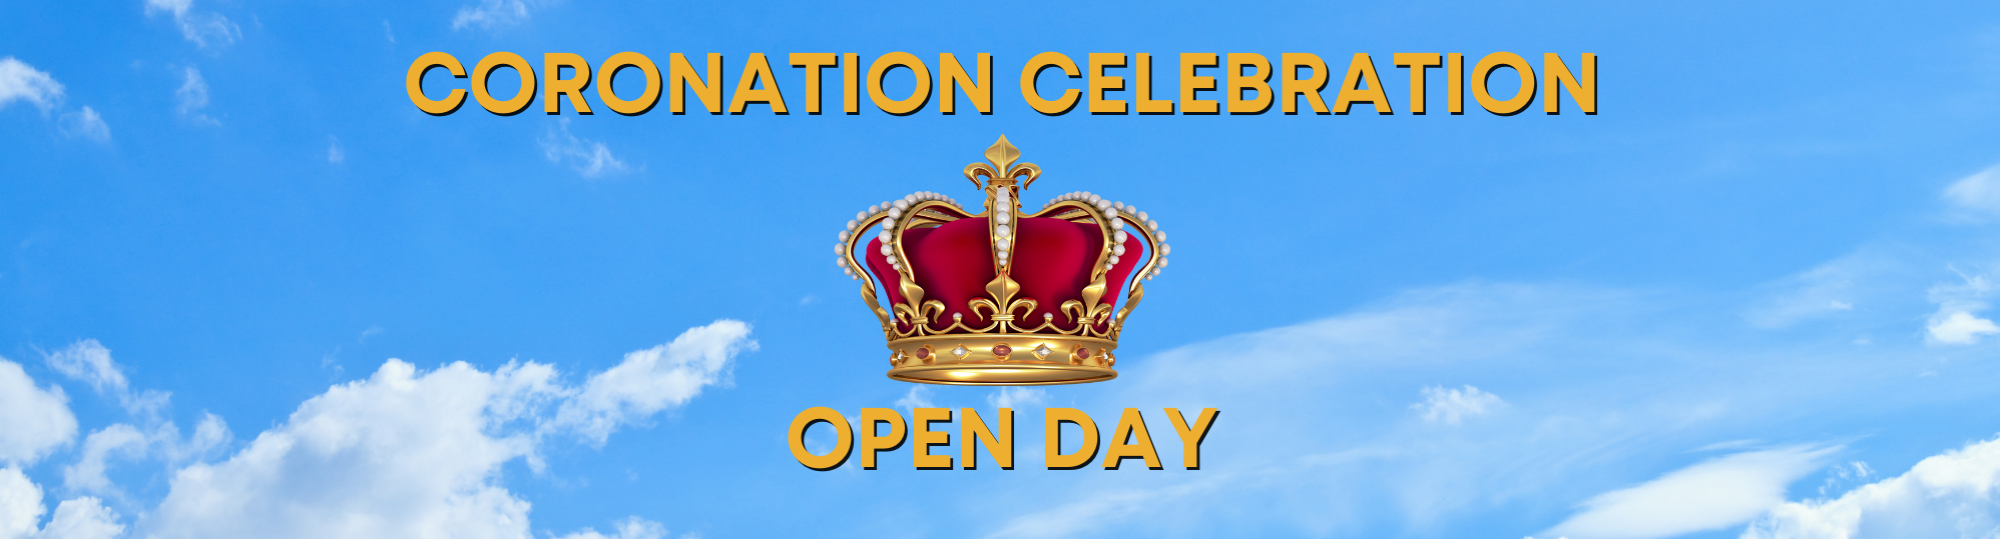 Coronation Celebration Open Day